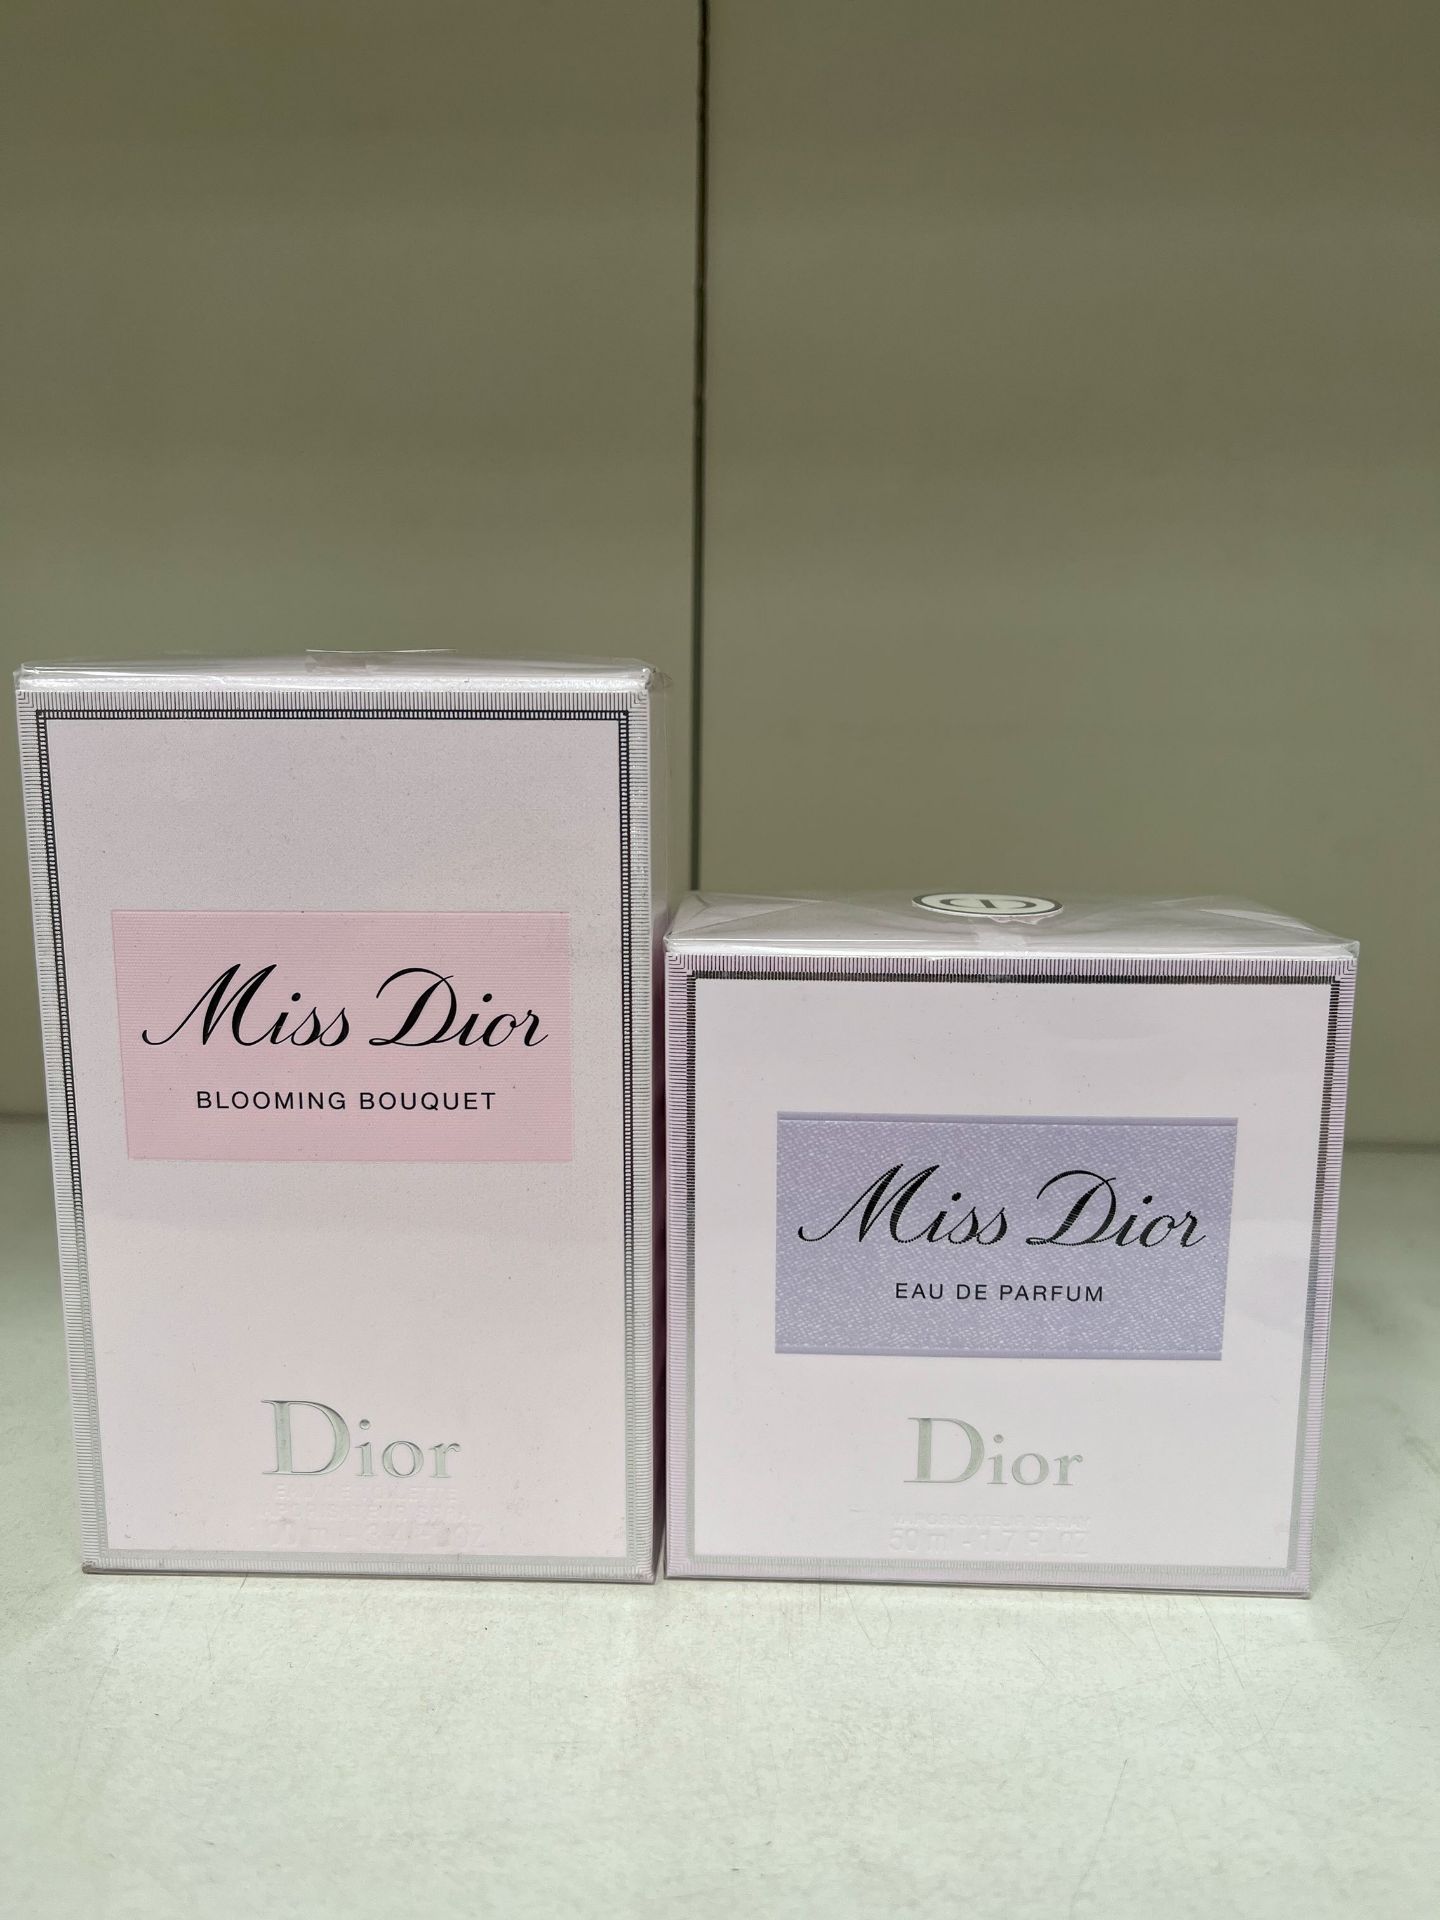 1x 100ml Dior Miss Dior Blooming Bouquet and 1x 50ml Dior Miss Dior